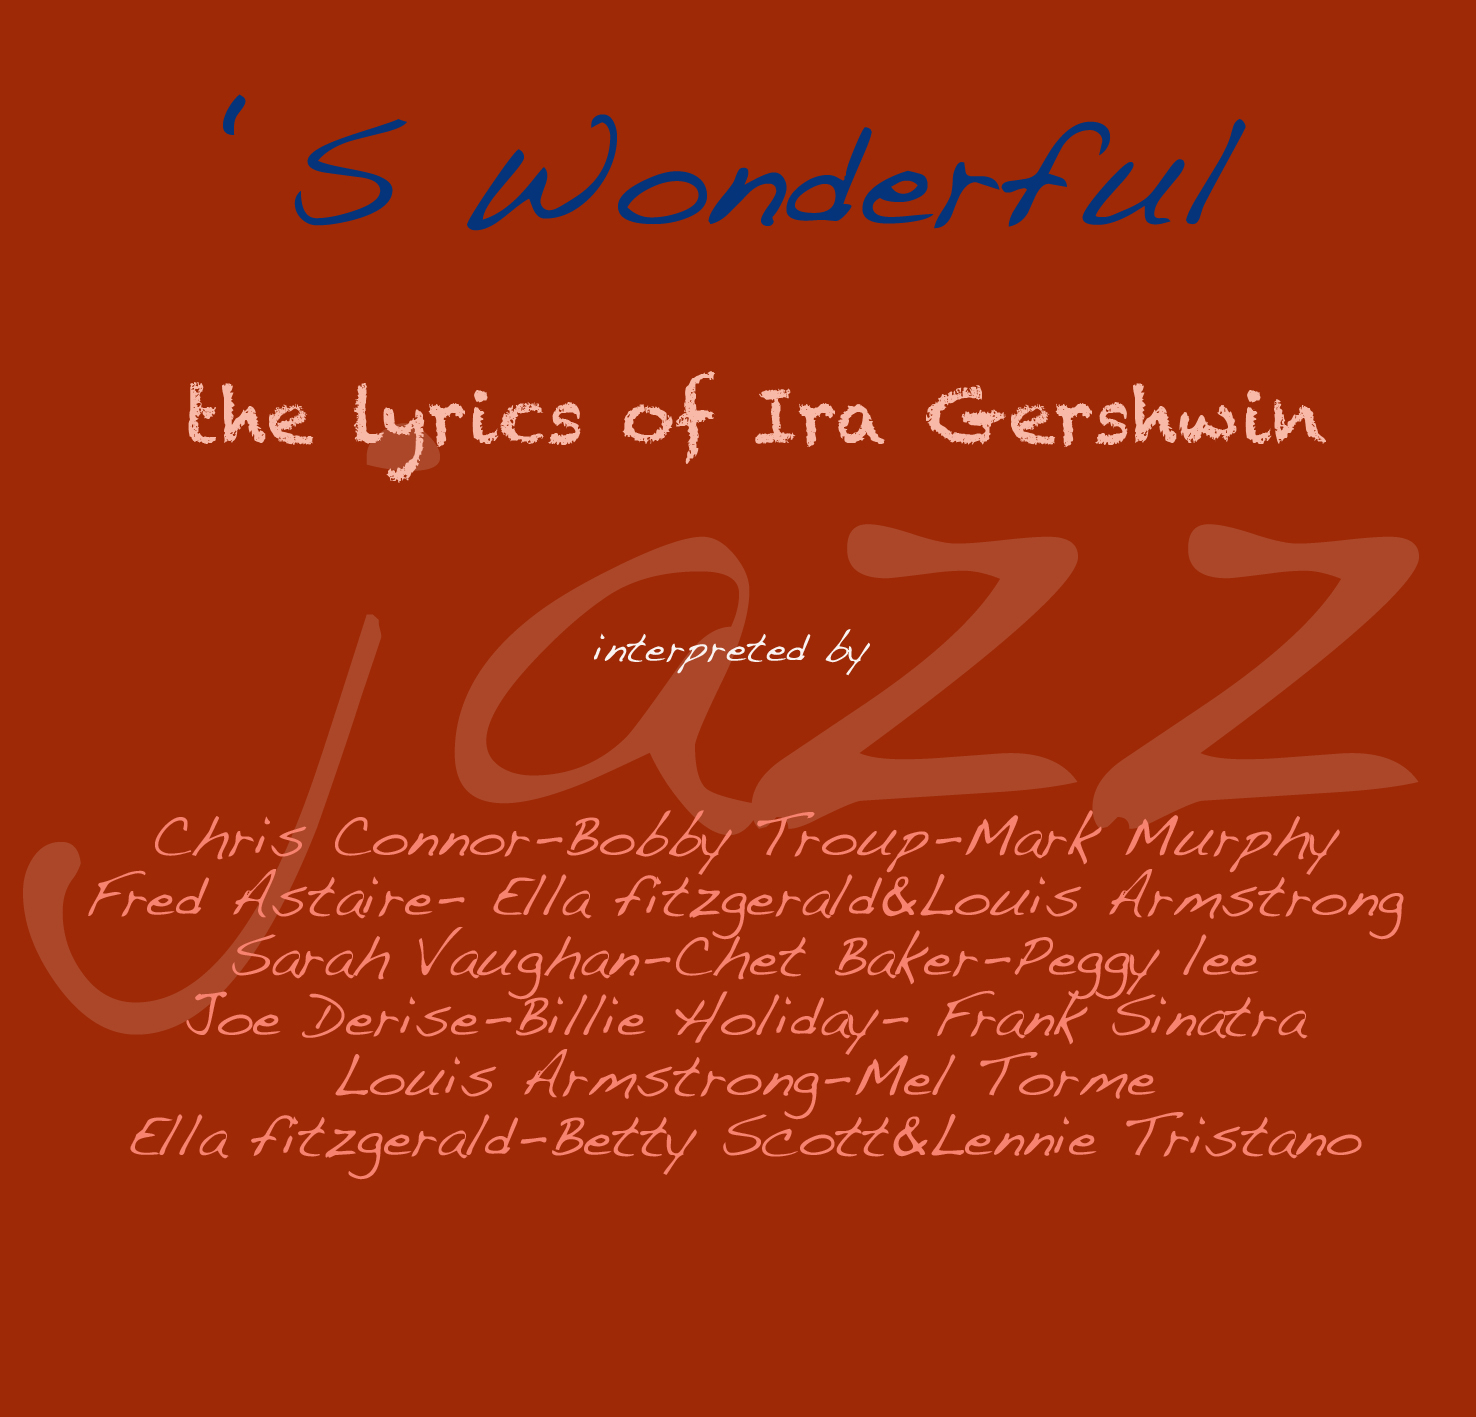 S Wonderful the Lyrics of Ira Gershwin